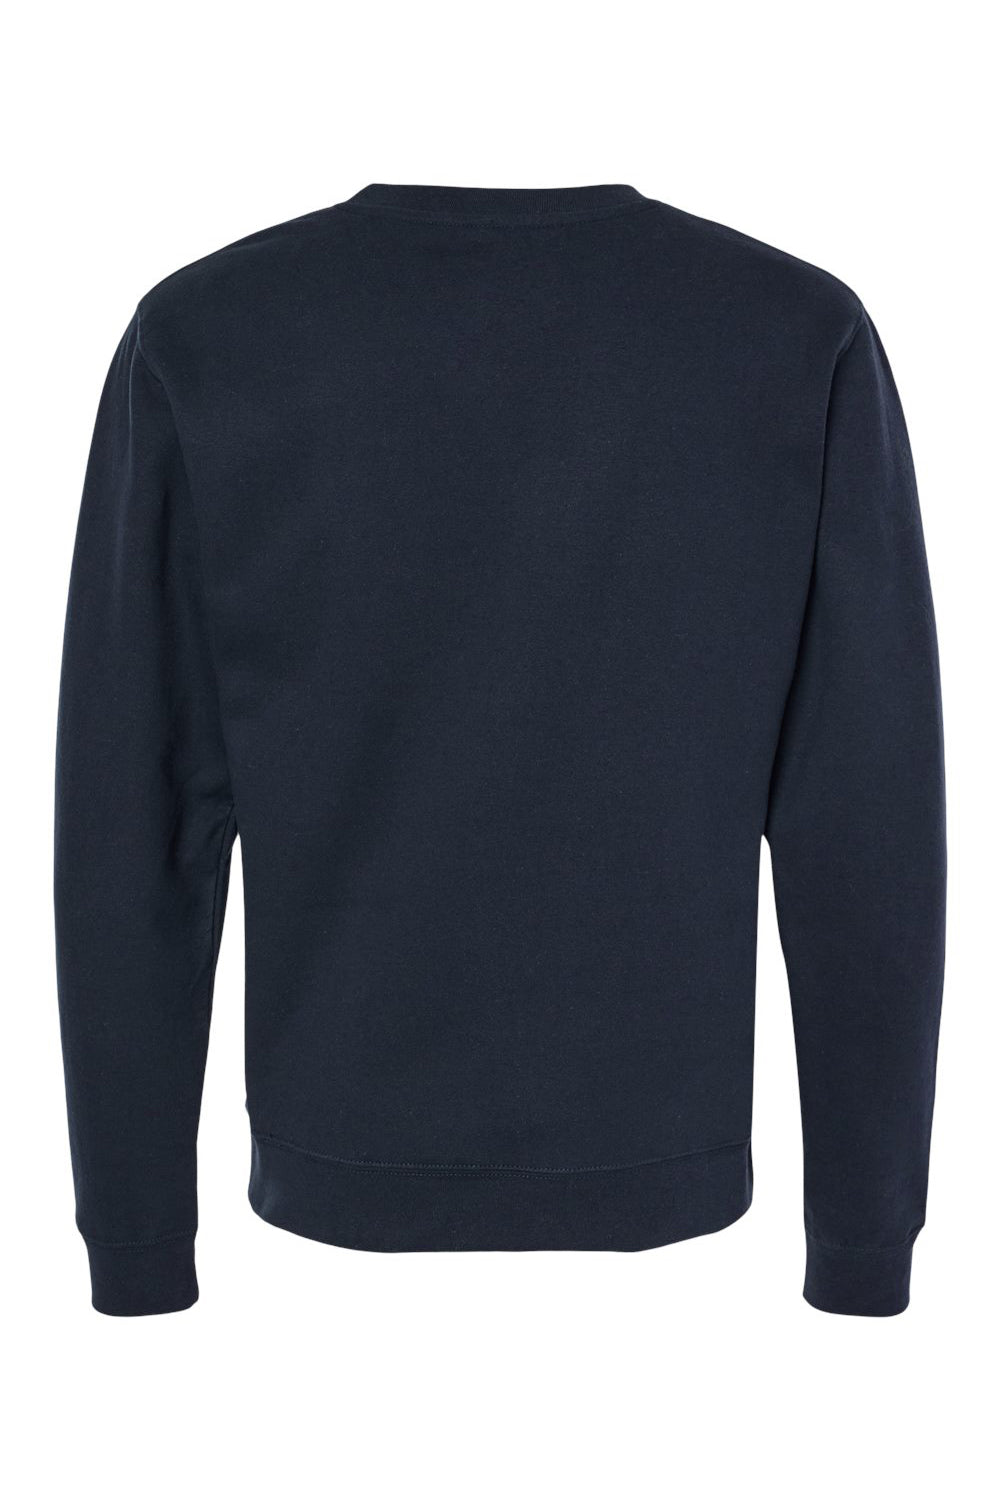 Independent Trading Co. SS3000 Mens Crewneck Sweatshirt Classic Navy Blue Flat Back